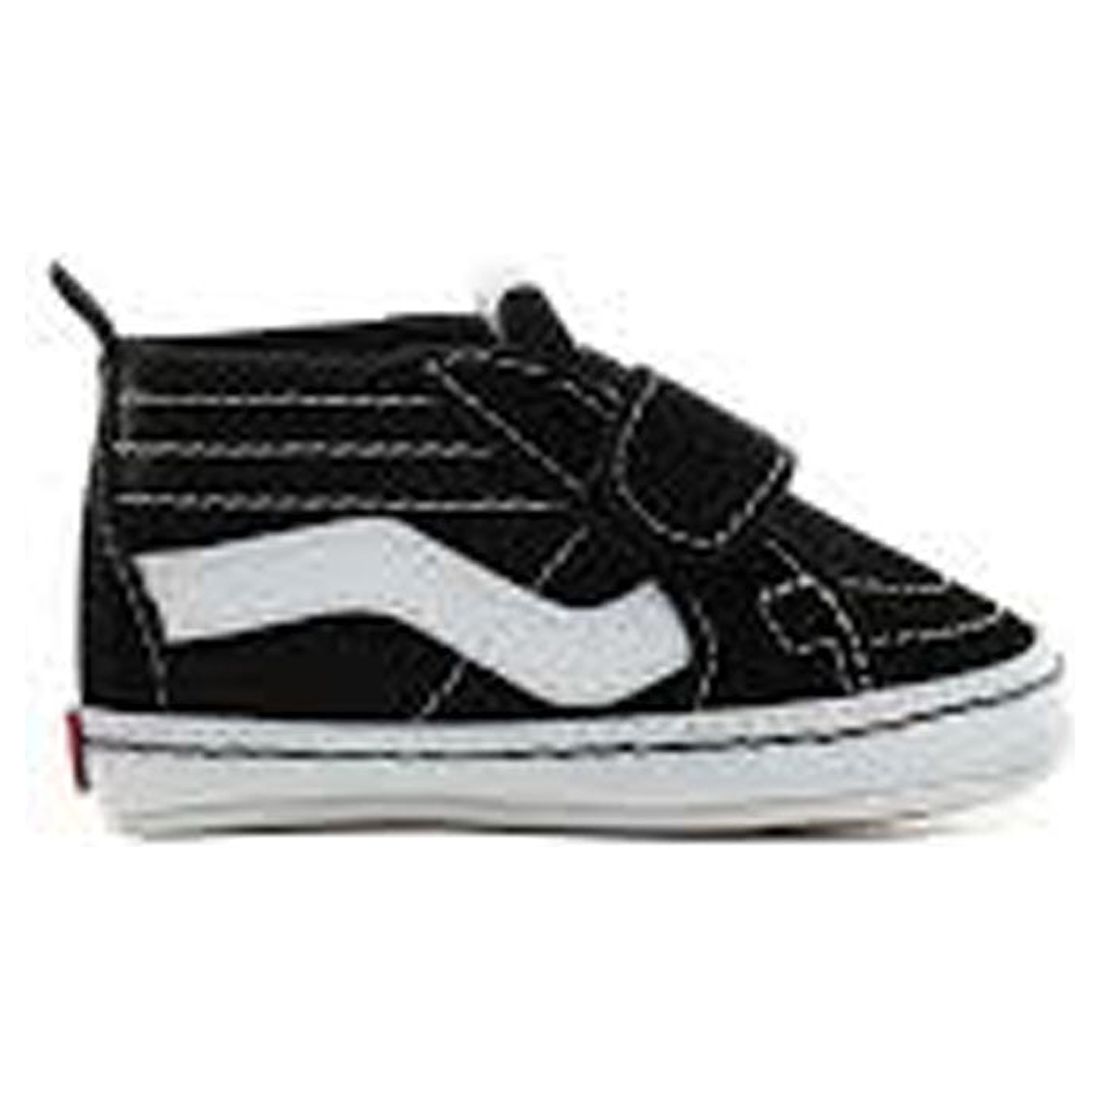 Vans SK8-Hi Unisex/Child shoe size 2  Casual VN0A346P6BT Black/White - image 1 of 1